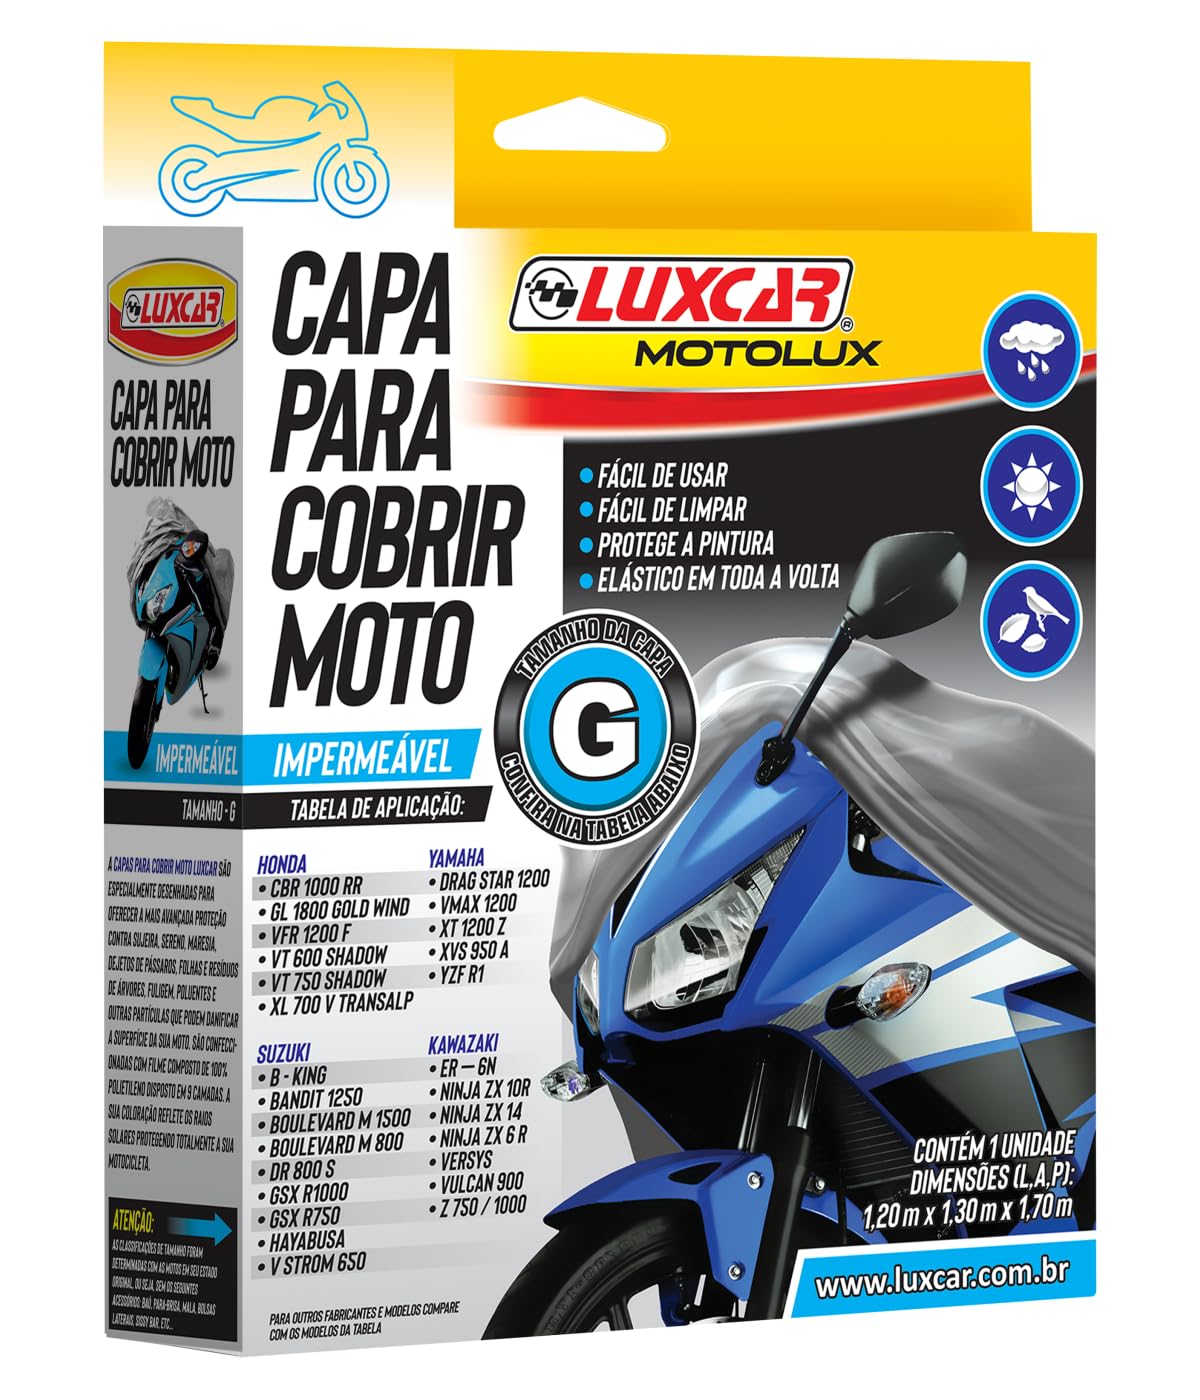 Capa Para Cobrir Motocicleta - G - Motolux Luxcar Grande